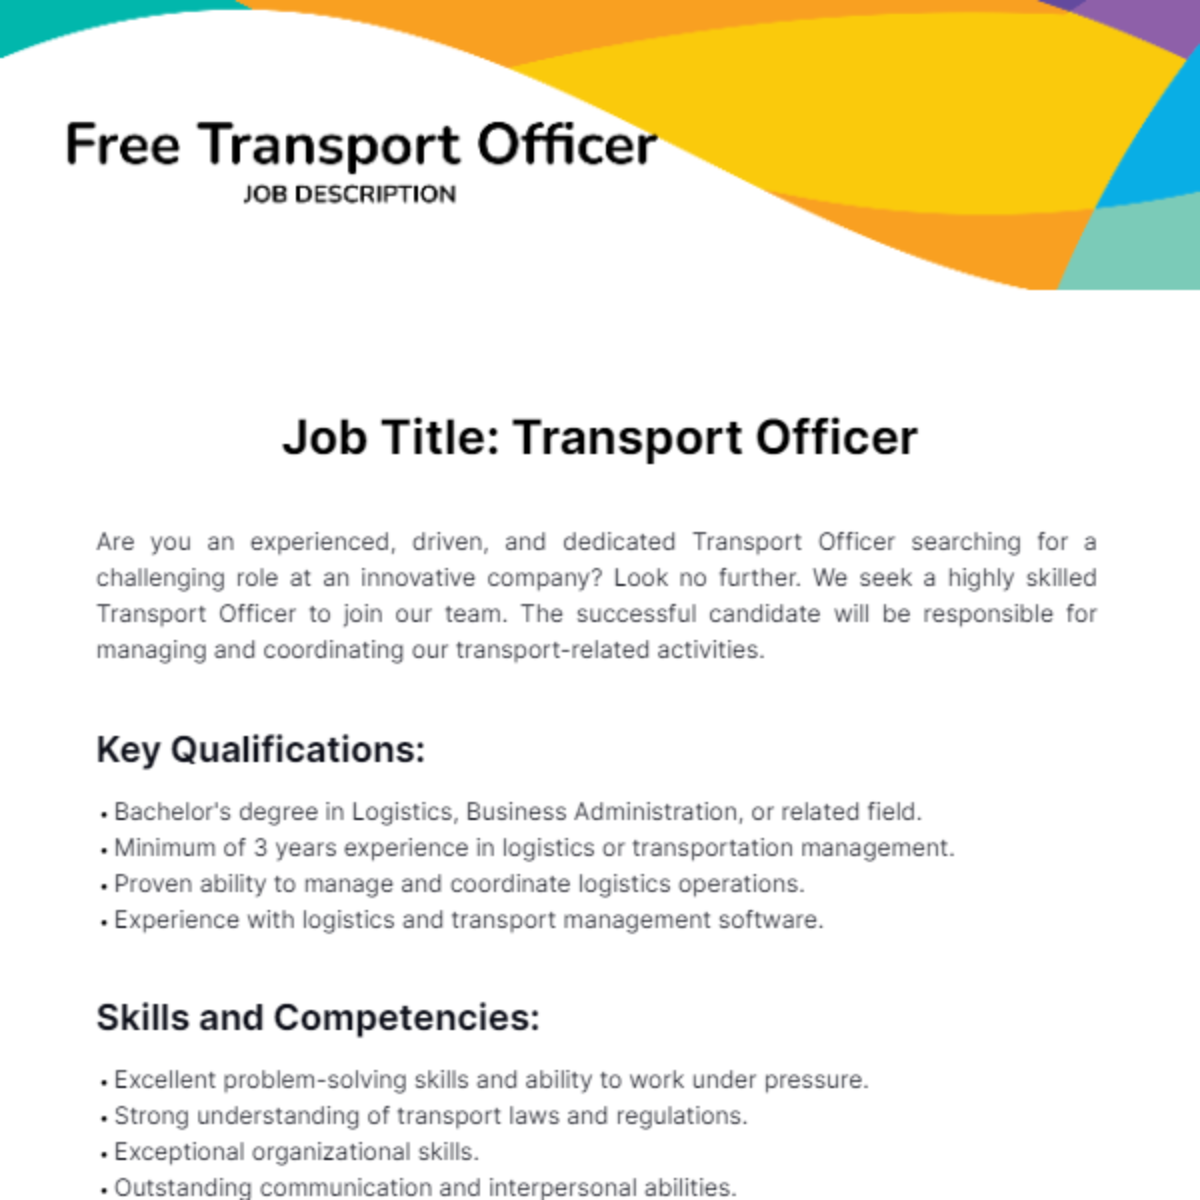 Transport Officer Job Description Template